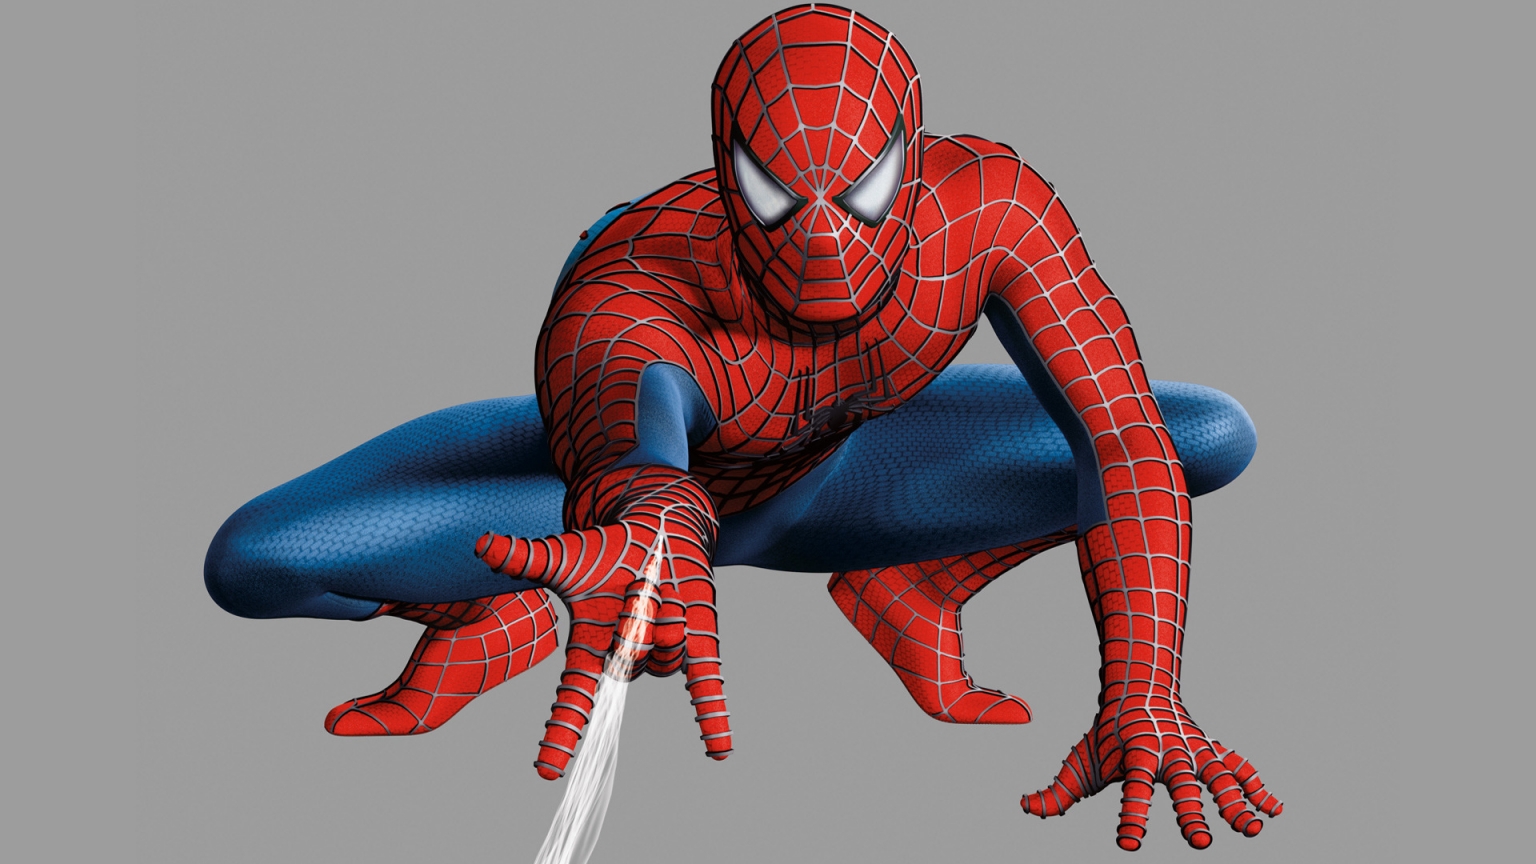 Spiderman 4 for 1536 x 864 HDTV resolution